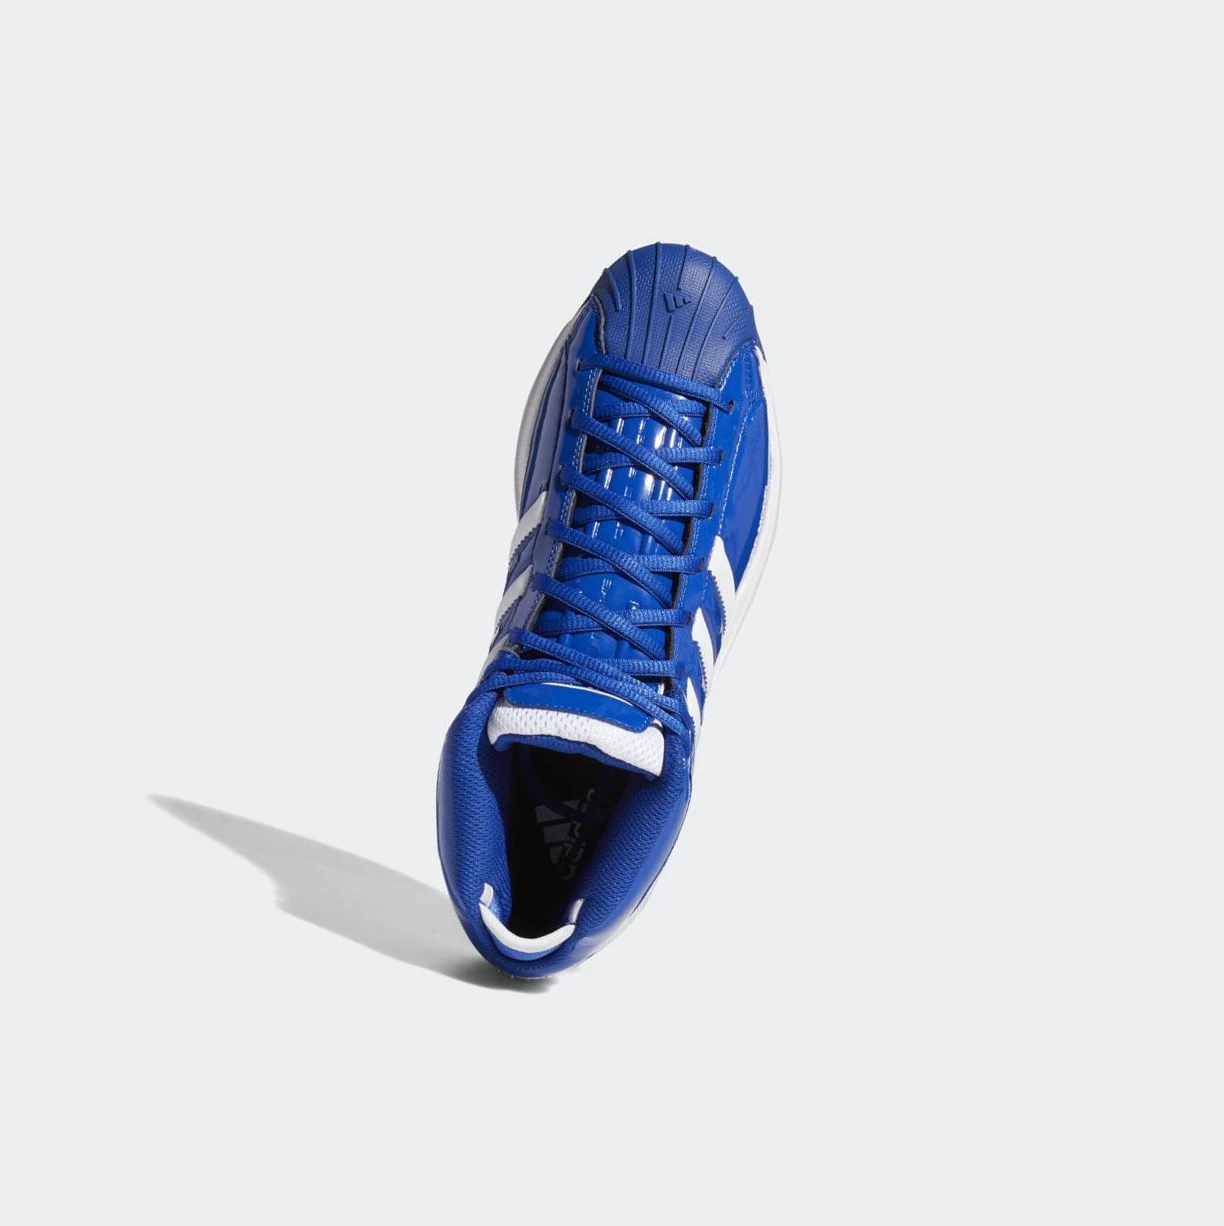 Basketbalove Tenisky Adidas Pro Model 2G Damske Modre | 365SKPRUIJZ